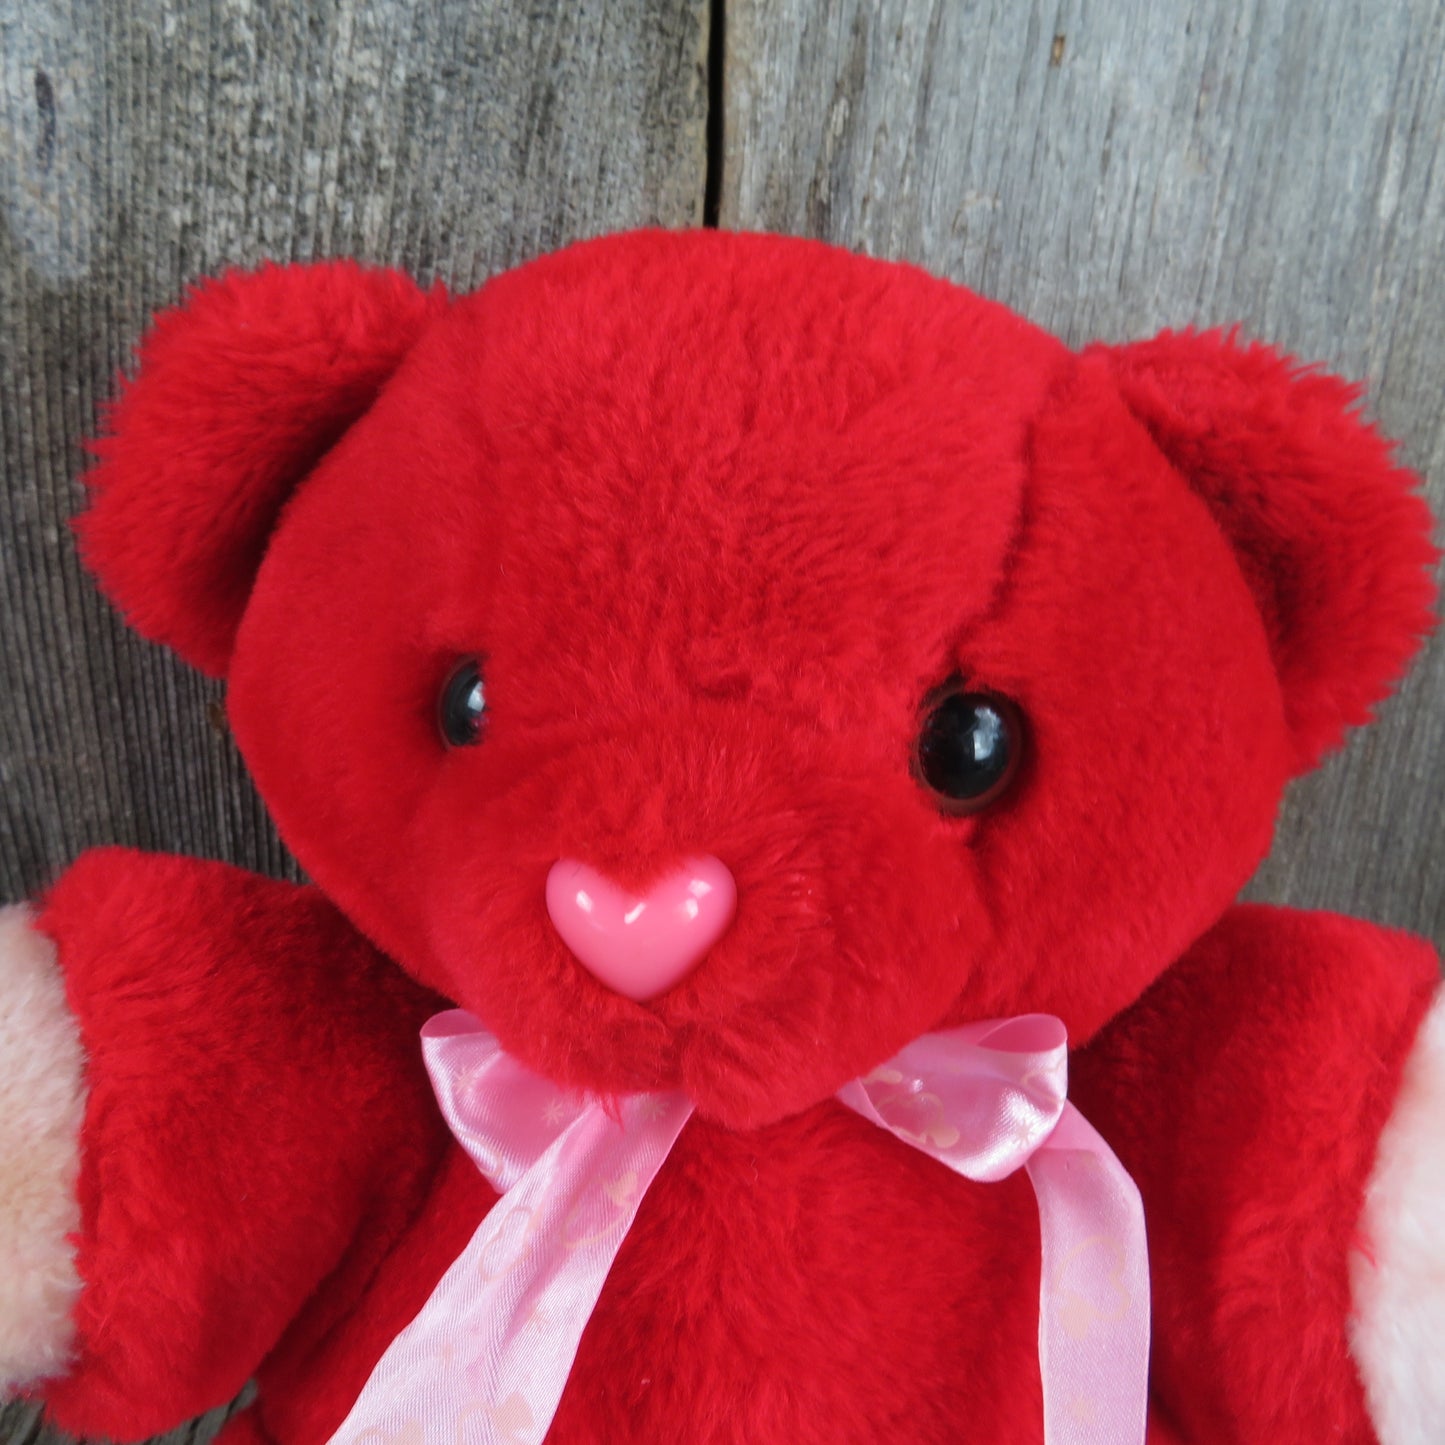 Vintage Red Teddy Bear Plush Stuffed Animal Pink Heart Nose Bow Fun World Valentines Taiwan - At Grandma's Table